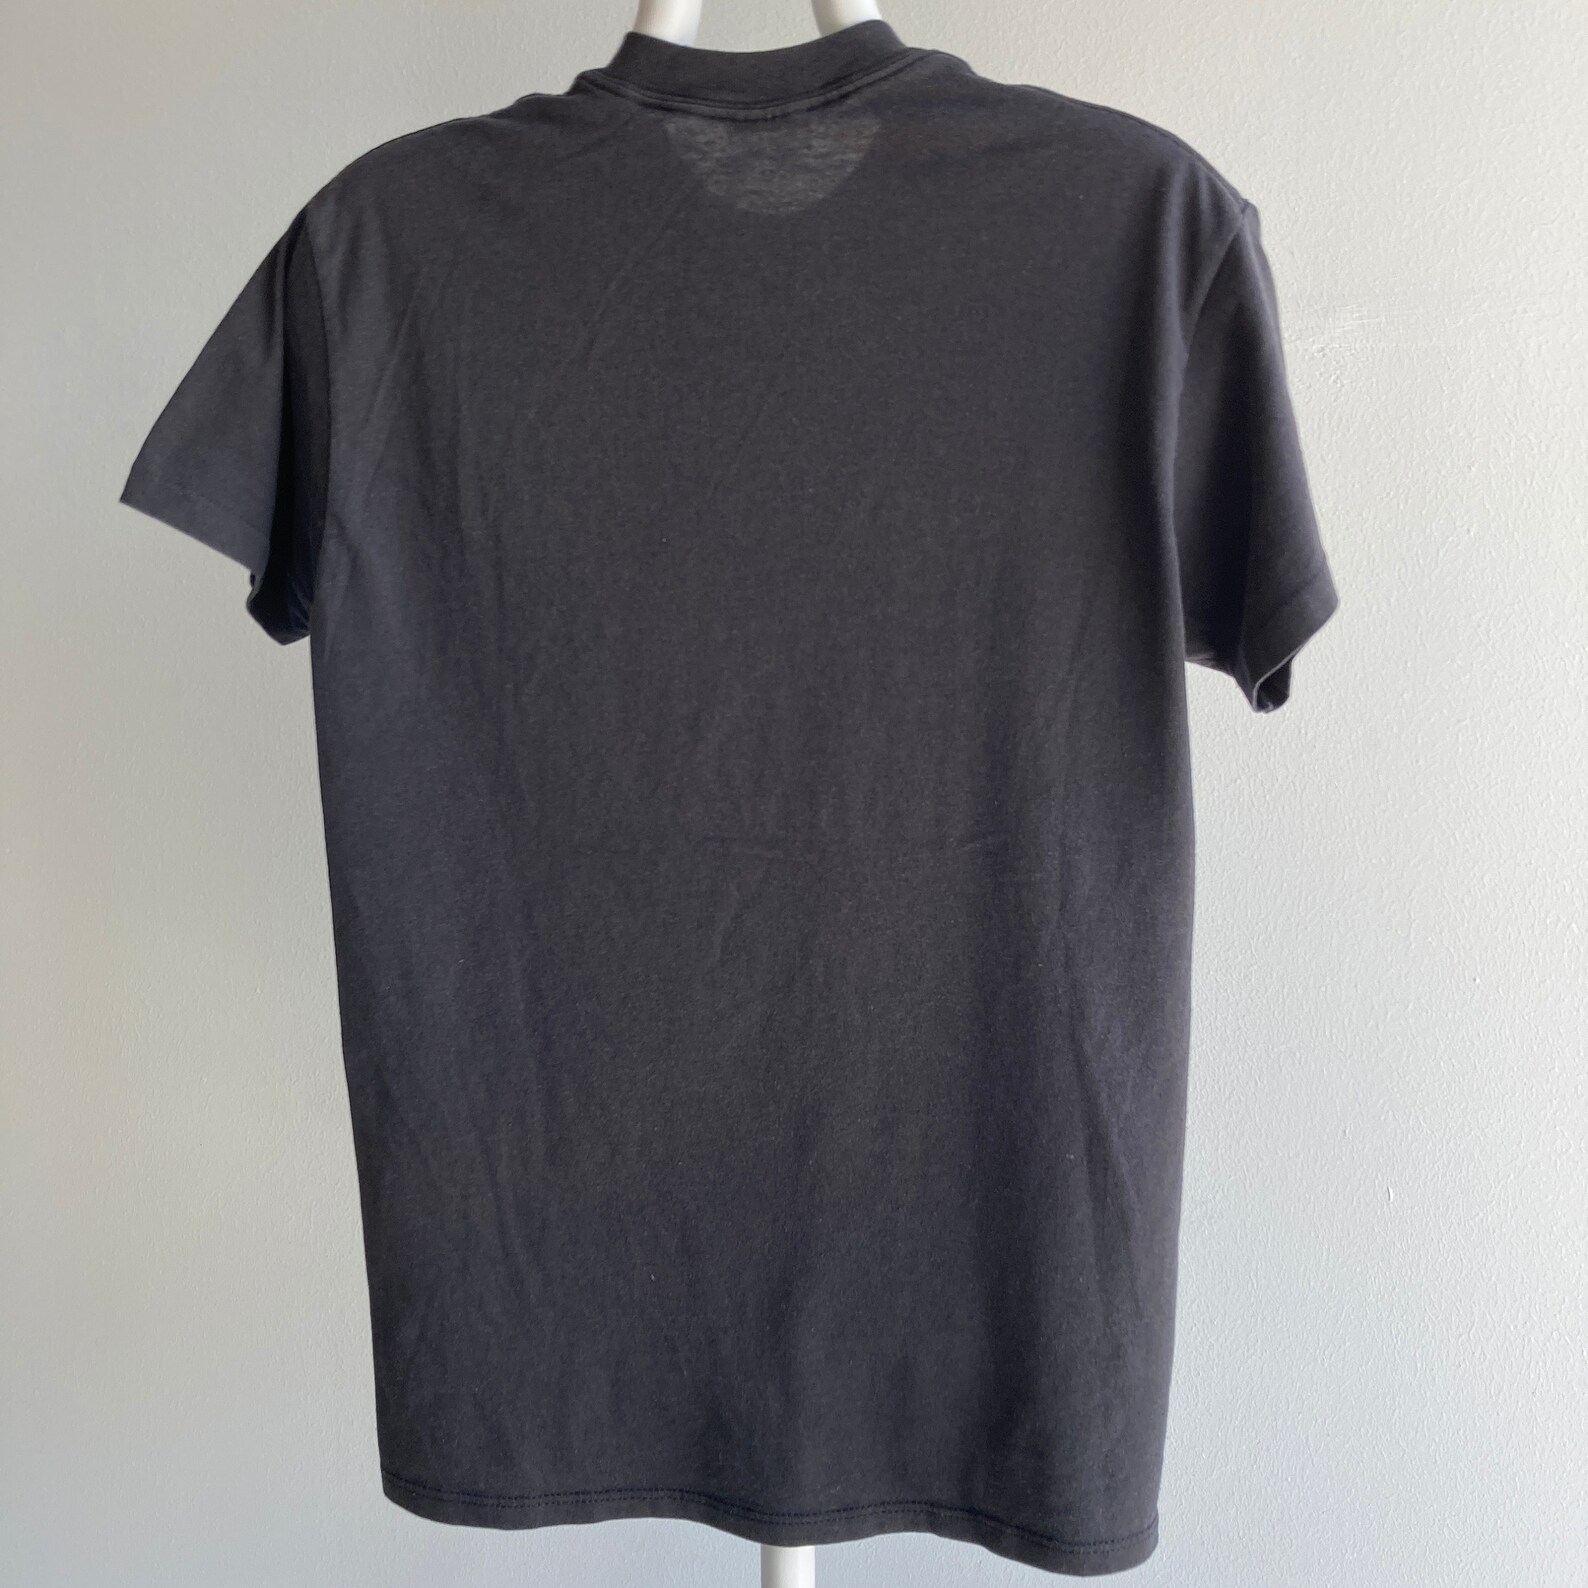 Vintage 80s Blank Black Pocket T-Shirt | Etsy